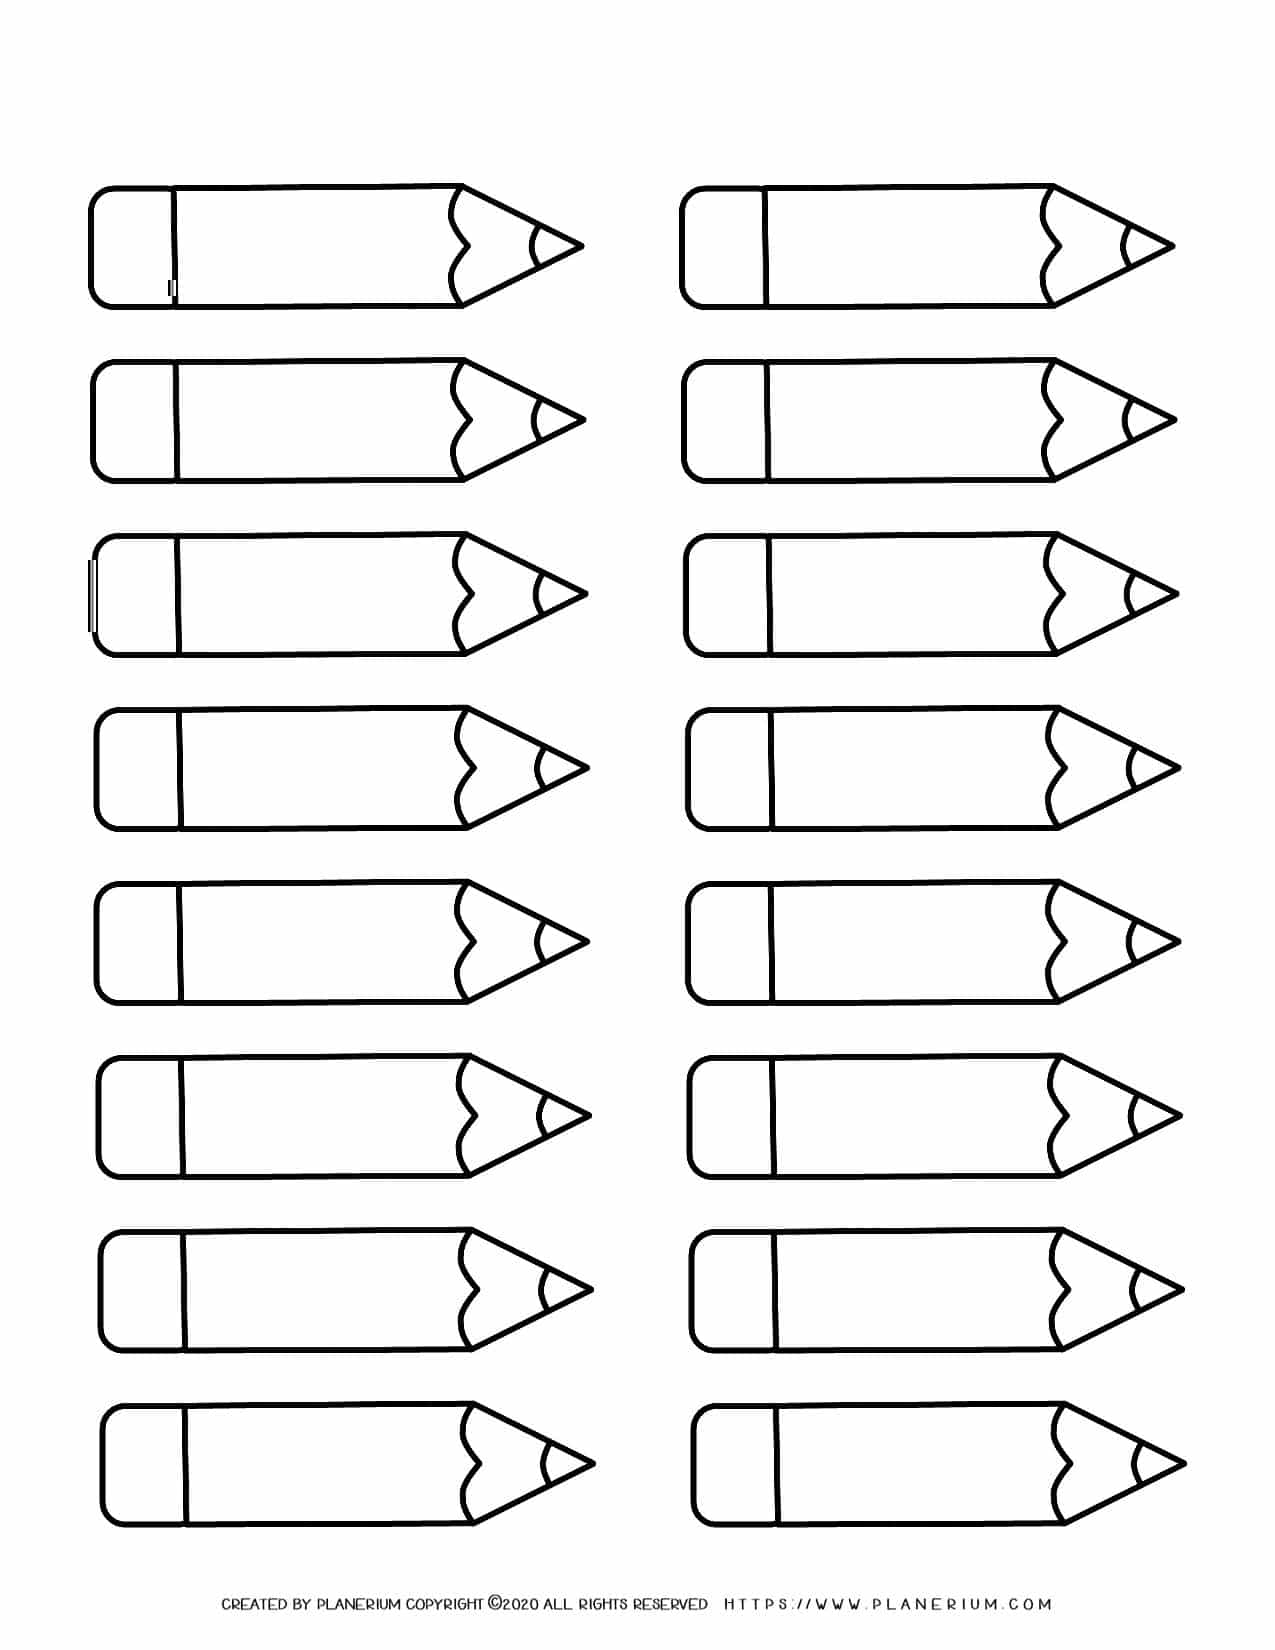 Sixteen Pencils Template | Planerium